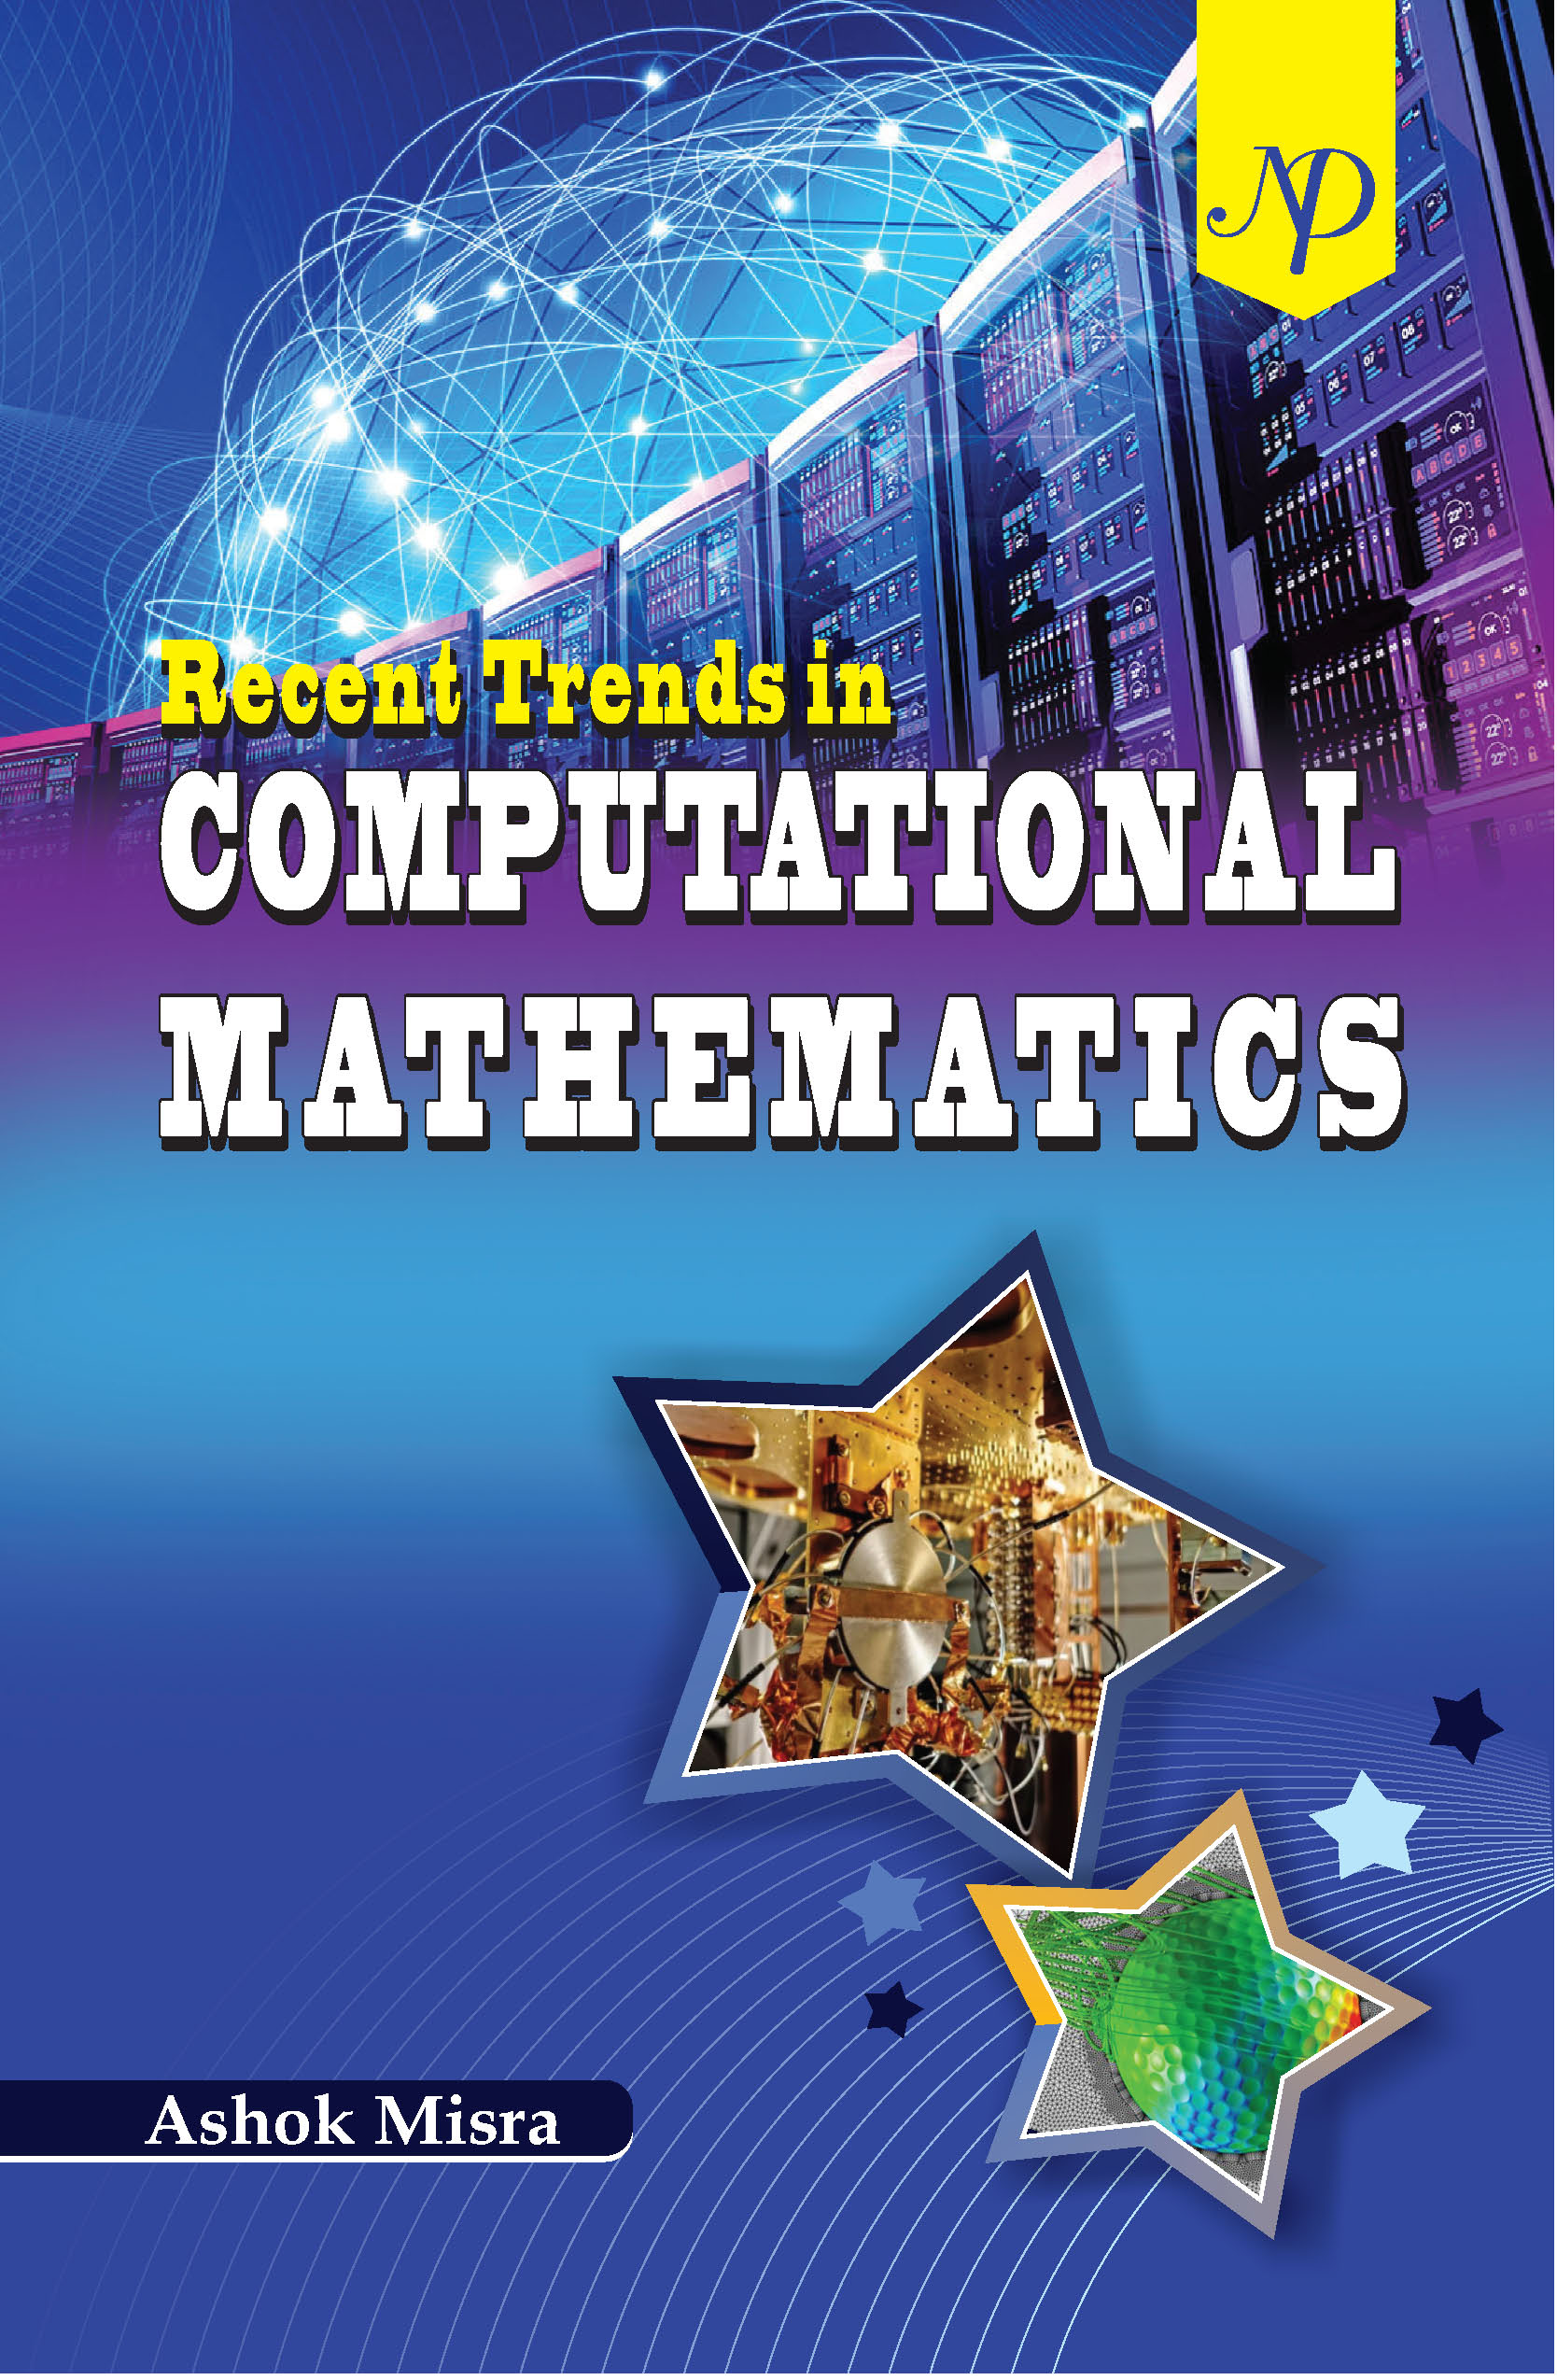 Recent Trends in Computational Mathematics Cover.jpg